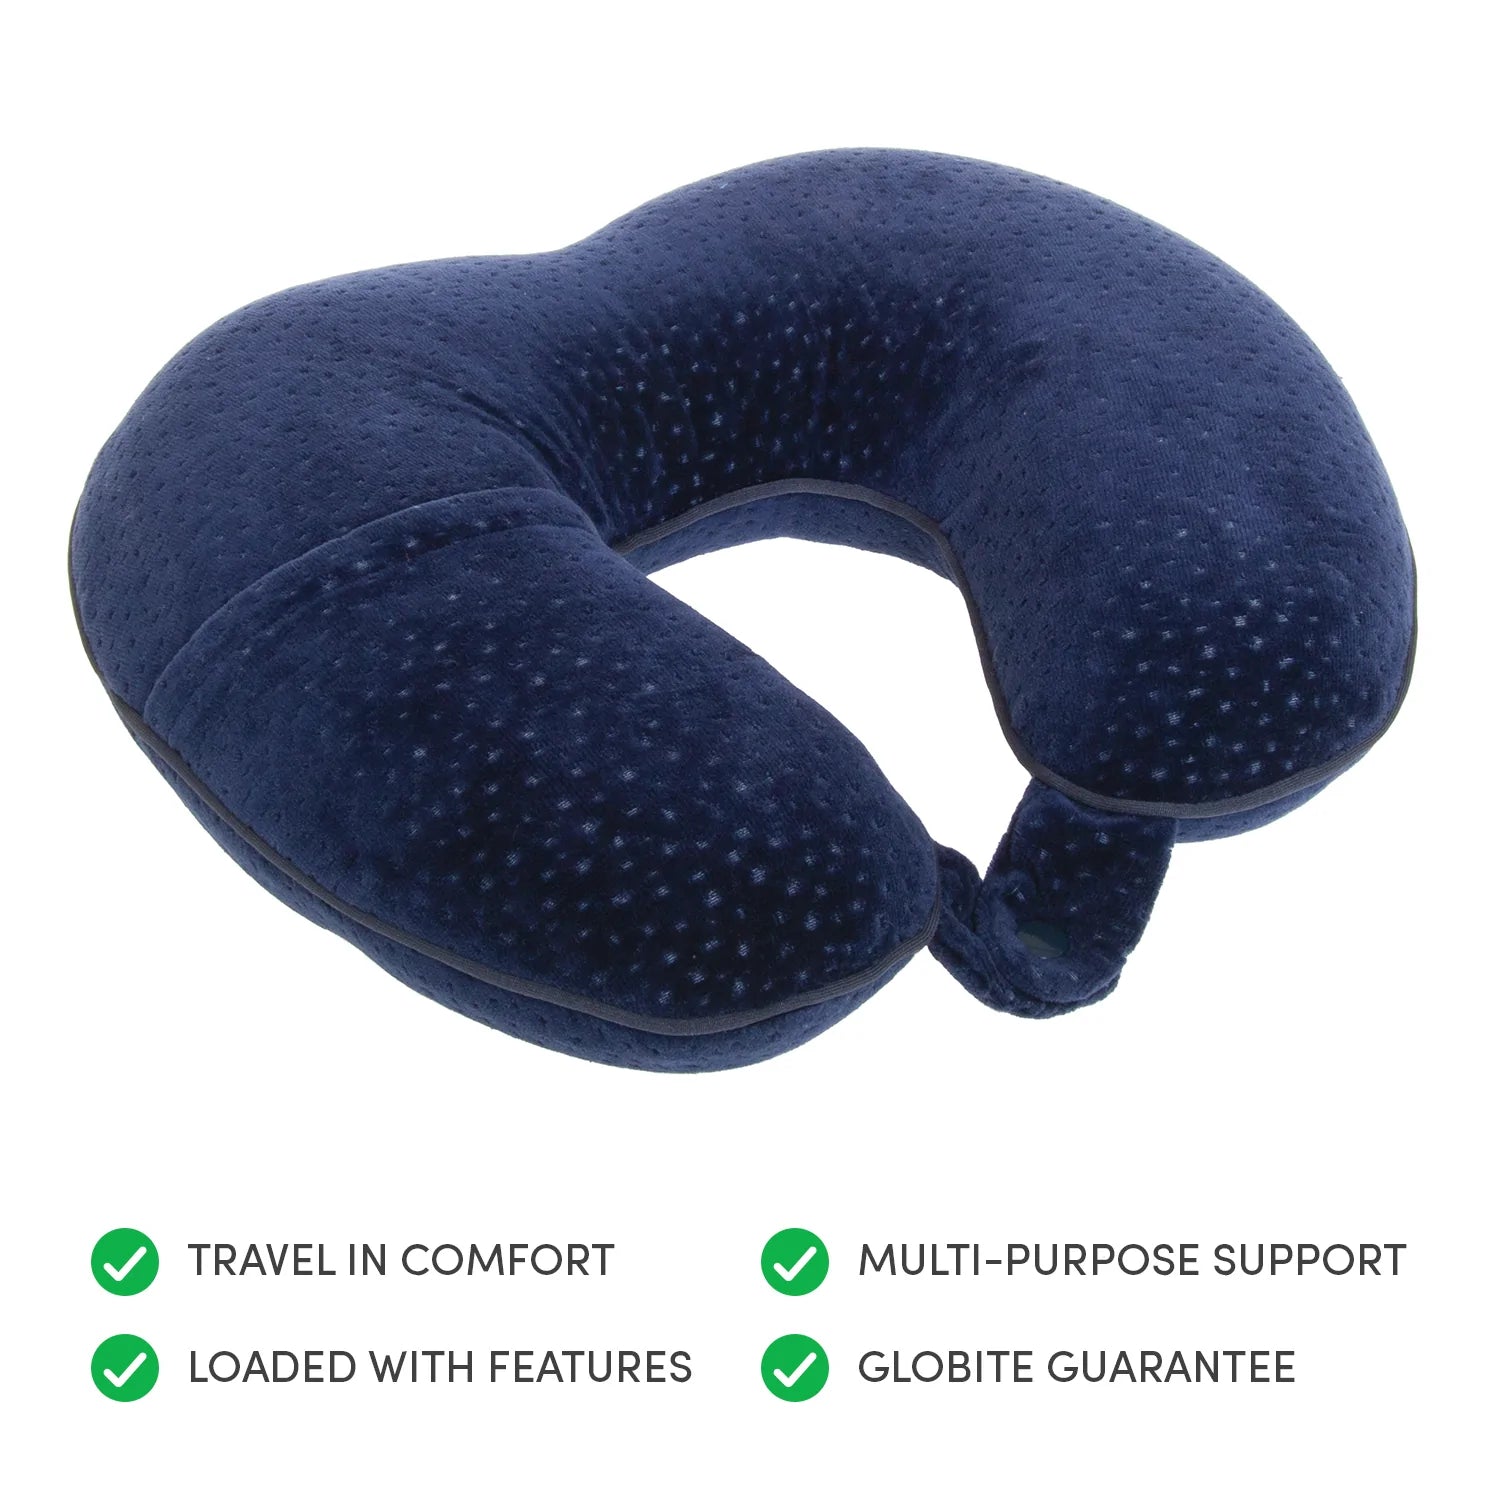 Globite Voyager Memory Foam Neck Pillow